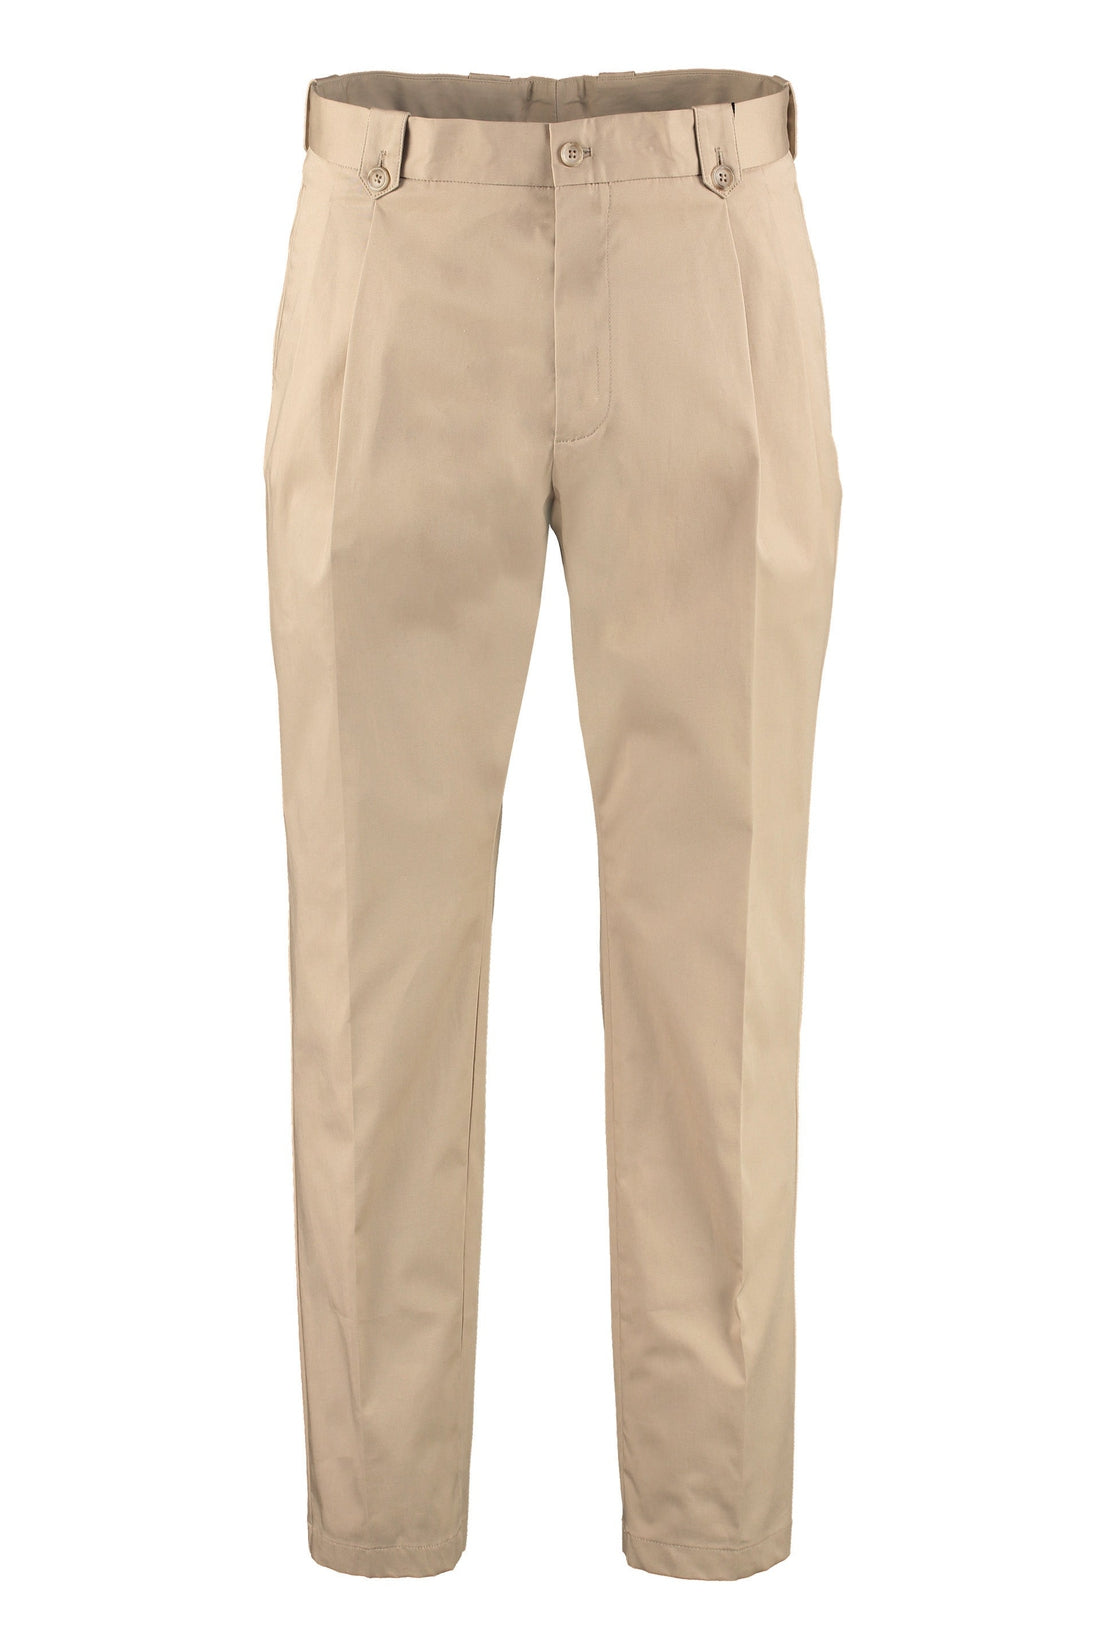 Dolce & Gabbana-OUTLET-SALE-Stretch cotton trousers-ARCHIVIST